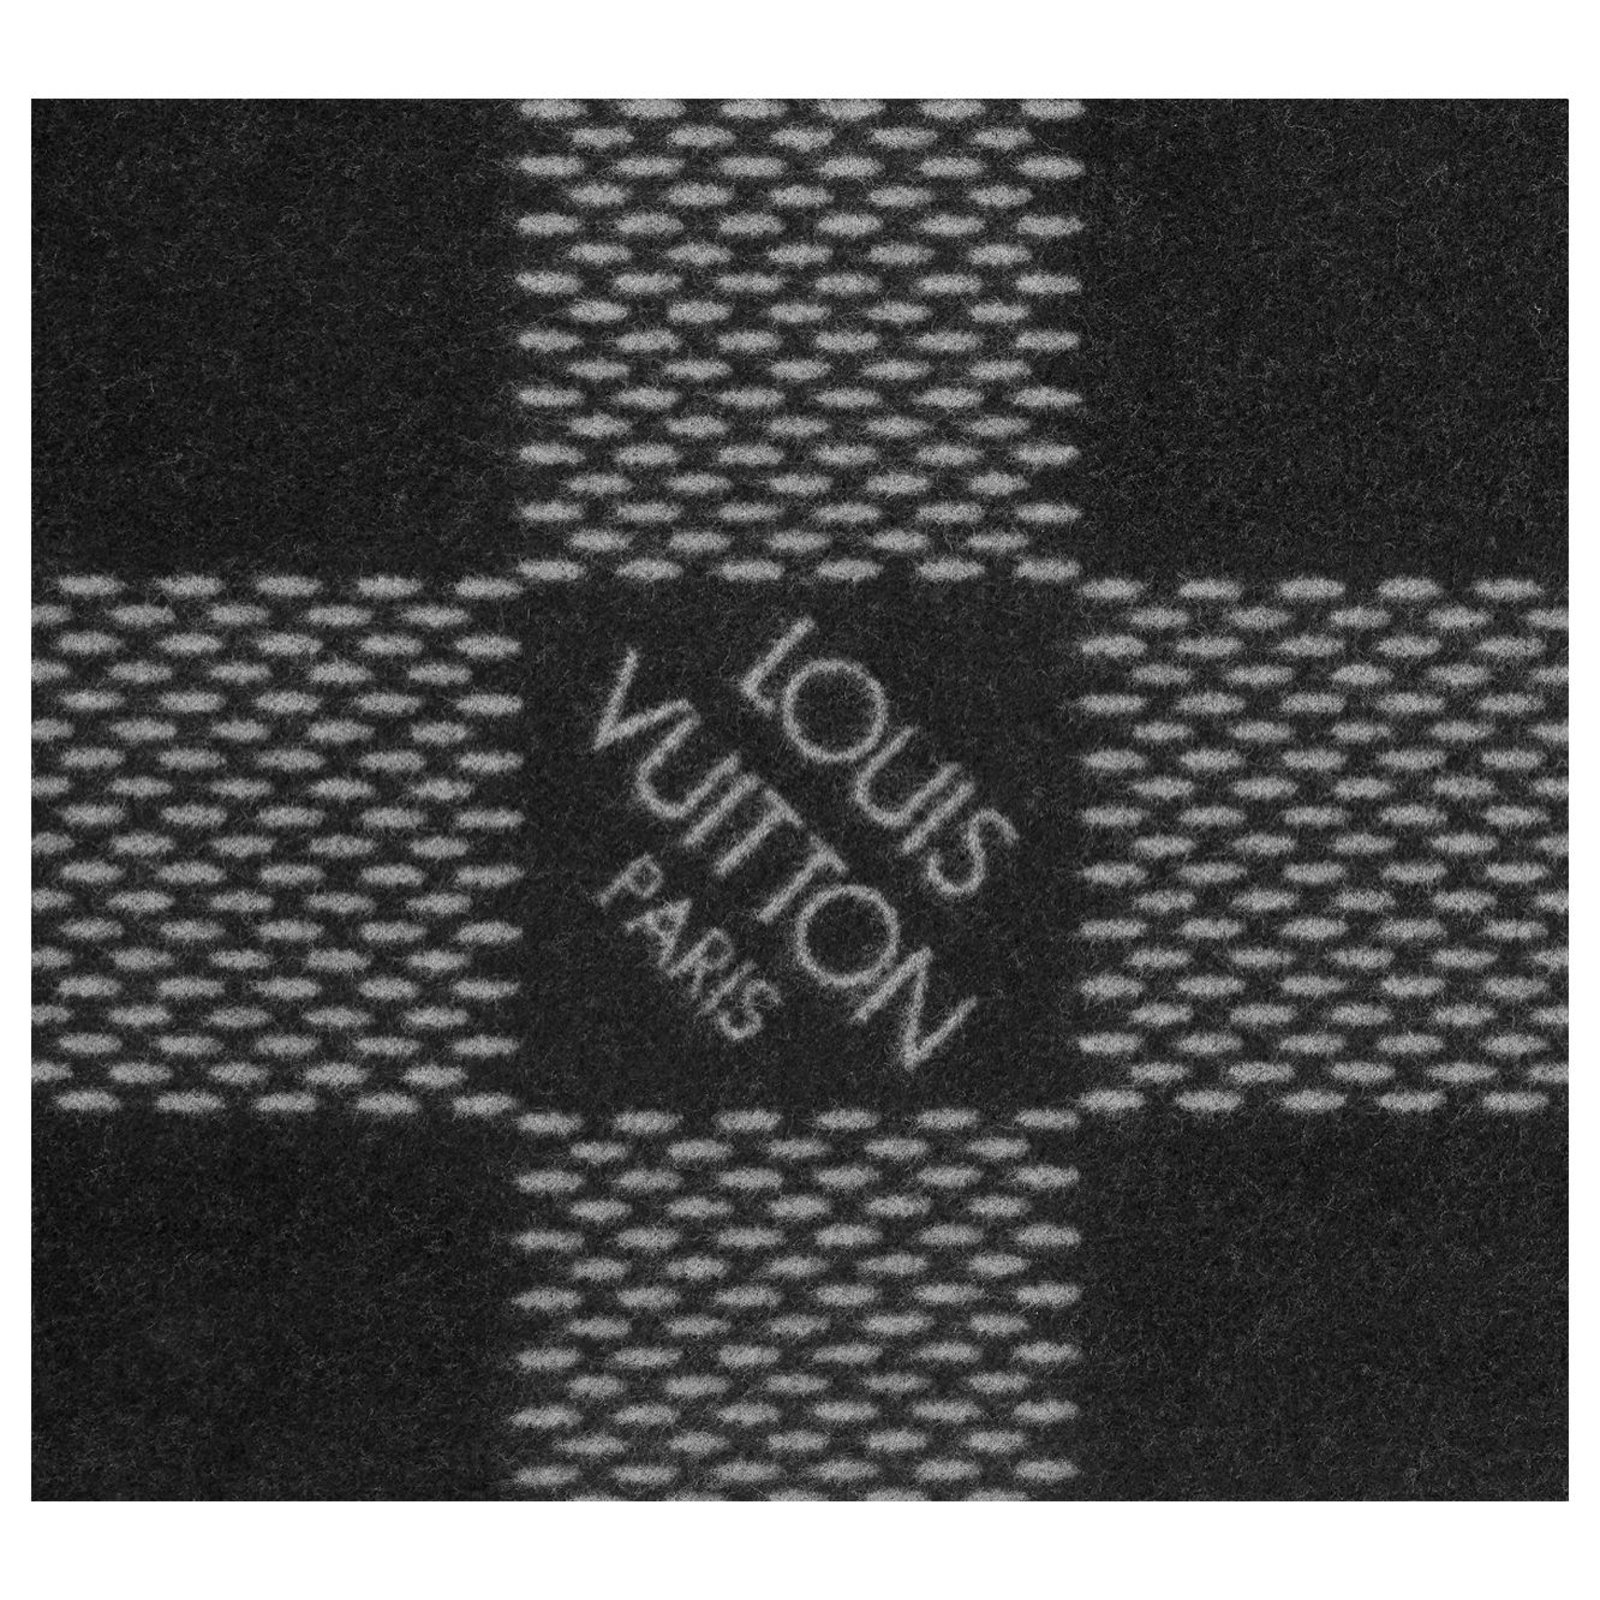 Louis Vuitton  Bedding  Louis Vuitton Throw Blanket Tan Ivory Monogram 9  Wool 0 Cashmere M70440 New  Poshmark